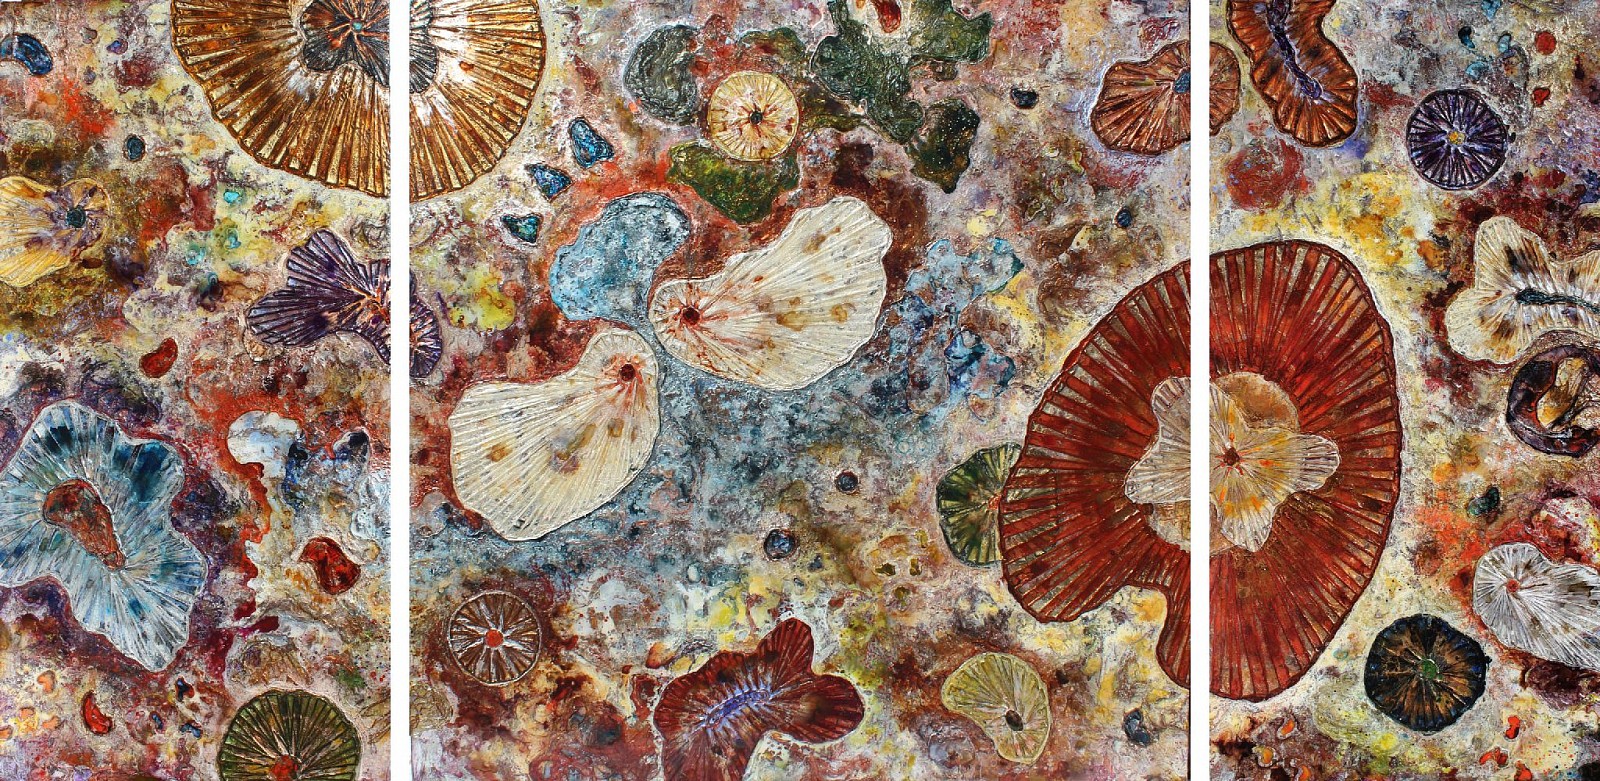 Monica Aiello, Ionian Garden V
Mixed Media on Panel, 60 x 120 in. (152.4 x 304.8 cm)
07907